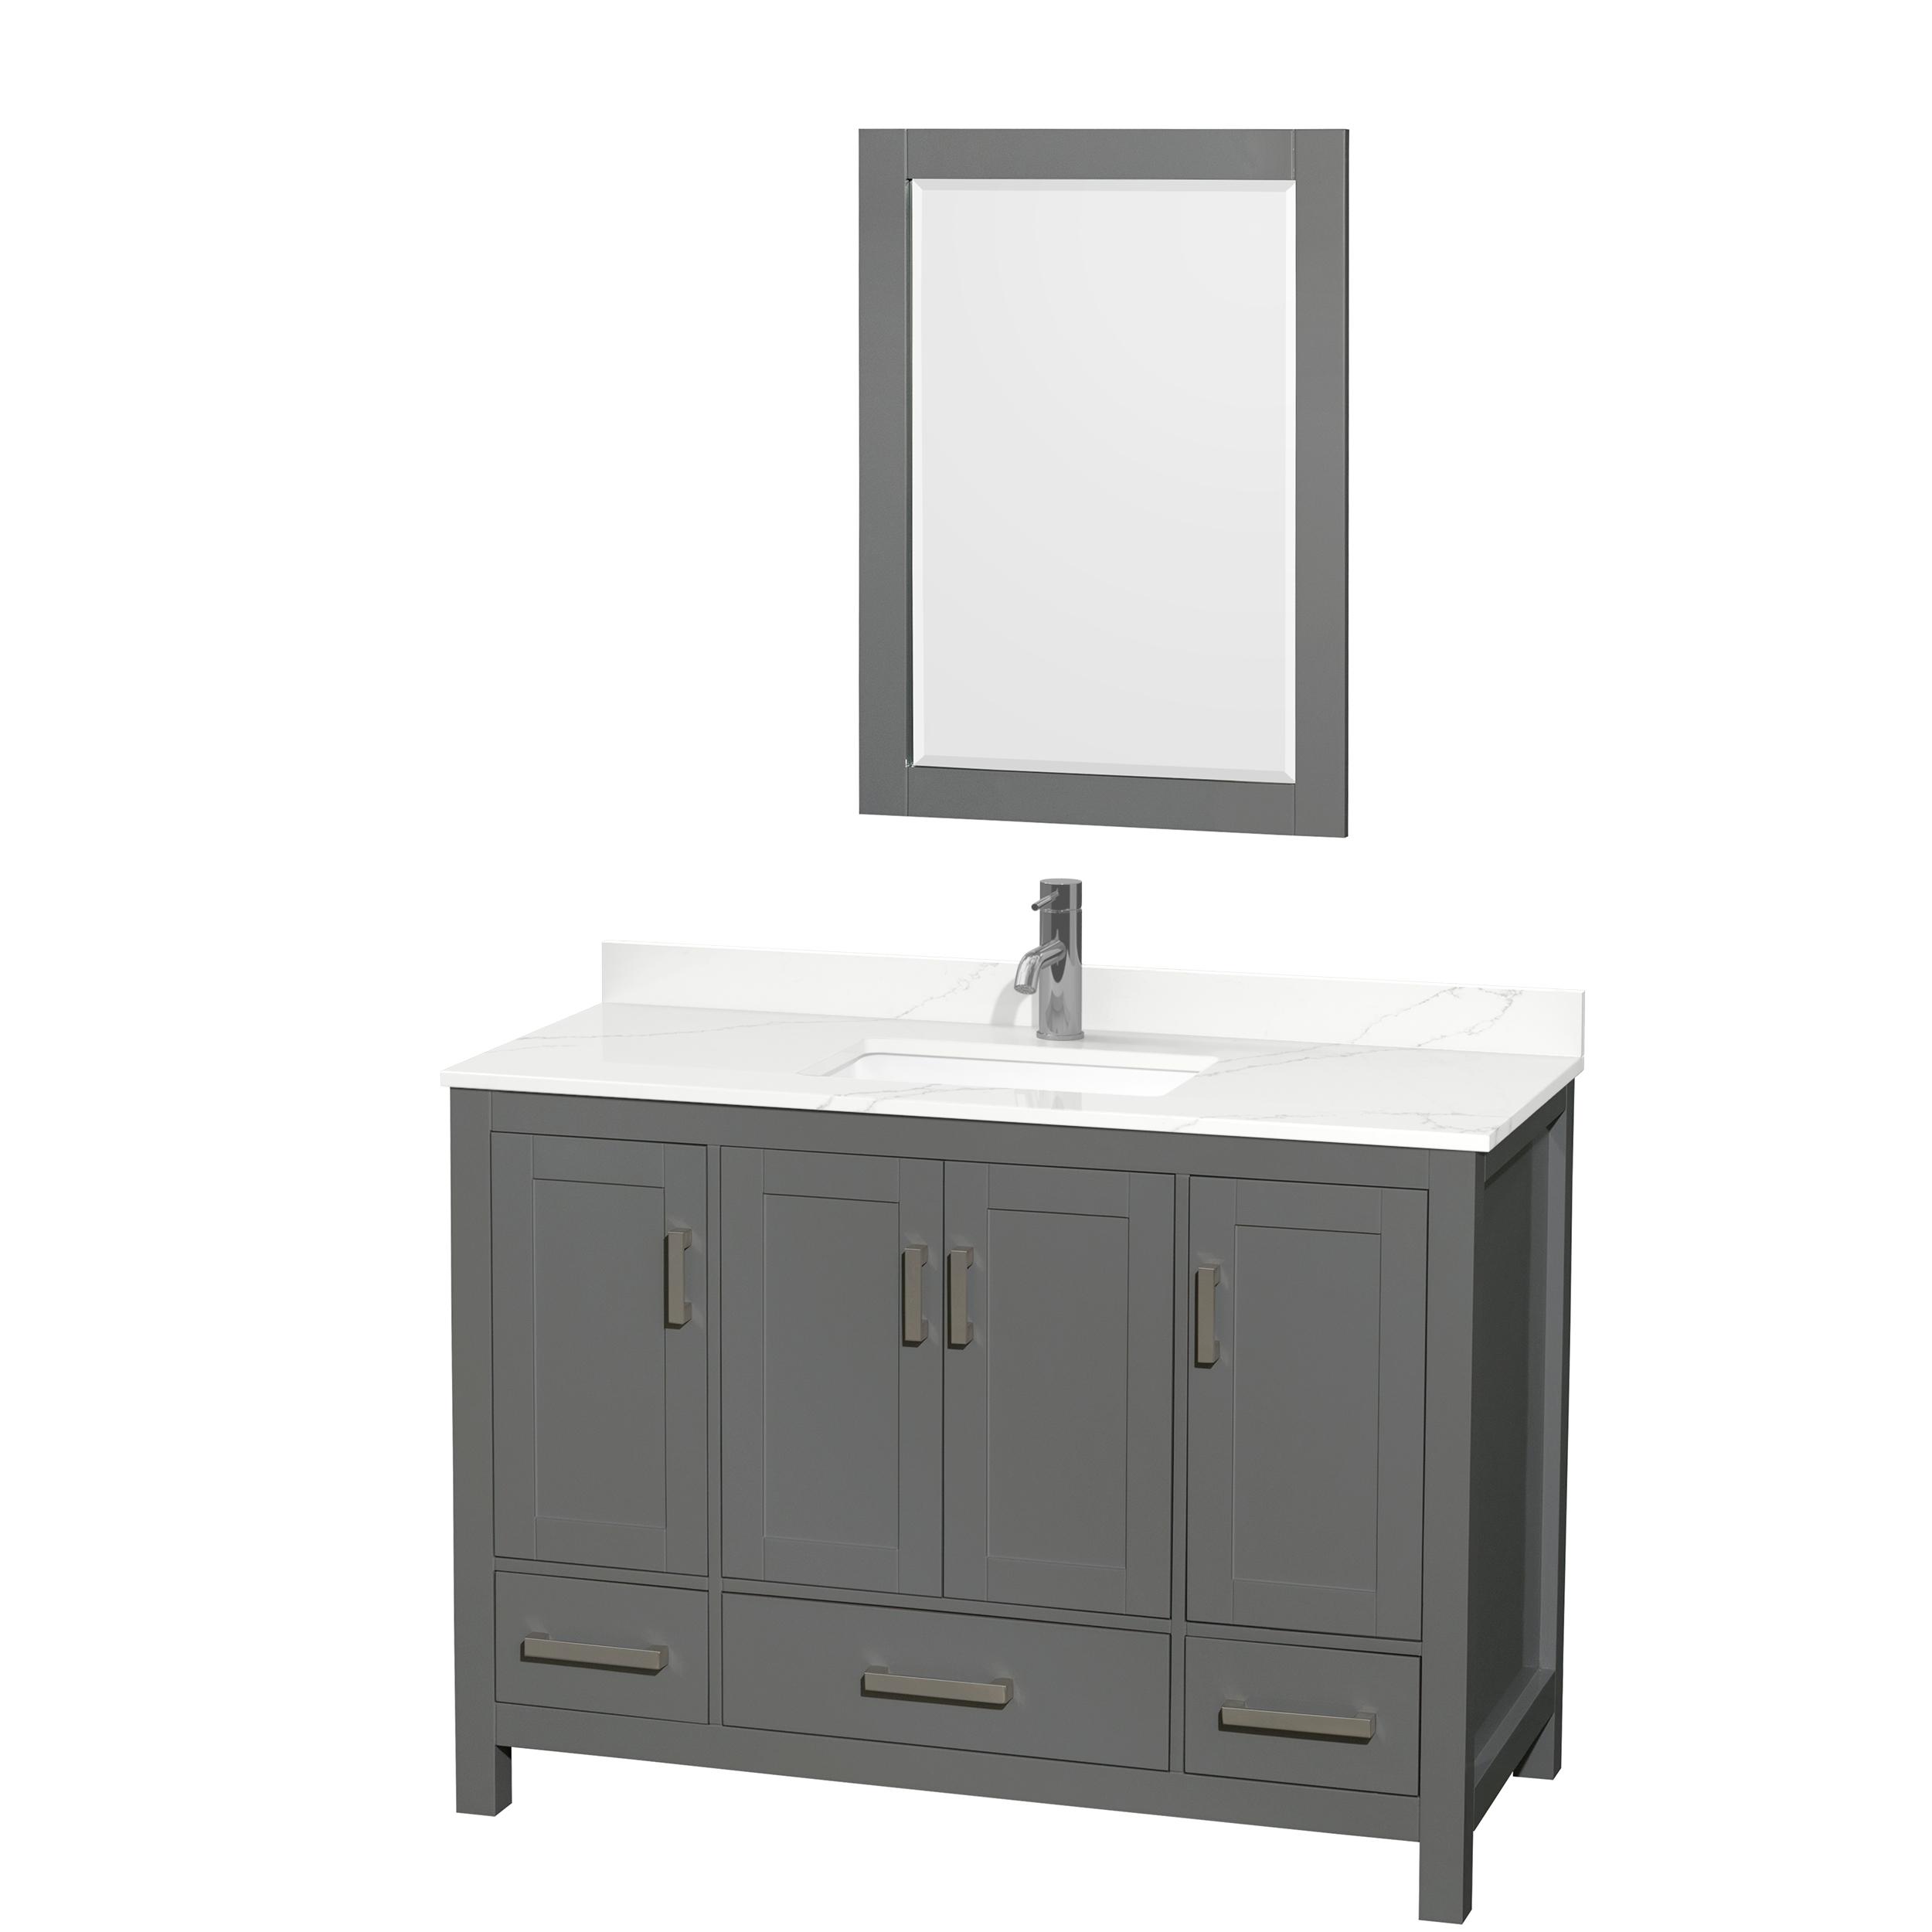 sheffield 48" single bathroom vanity by wyndham collection - dark gray